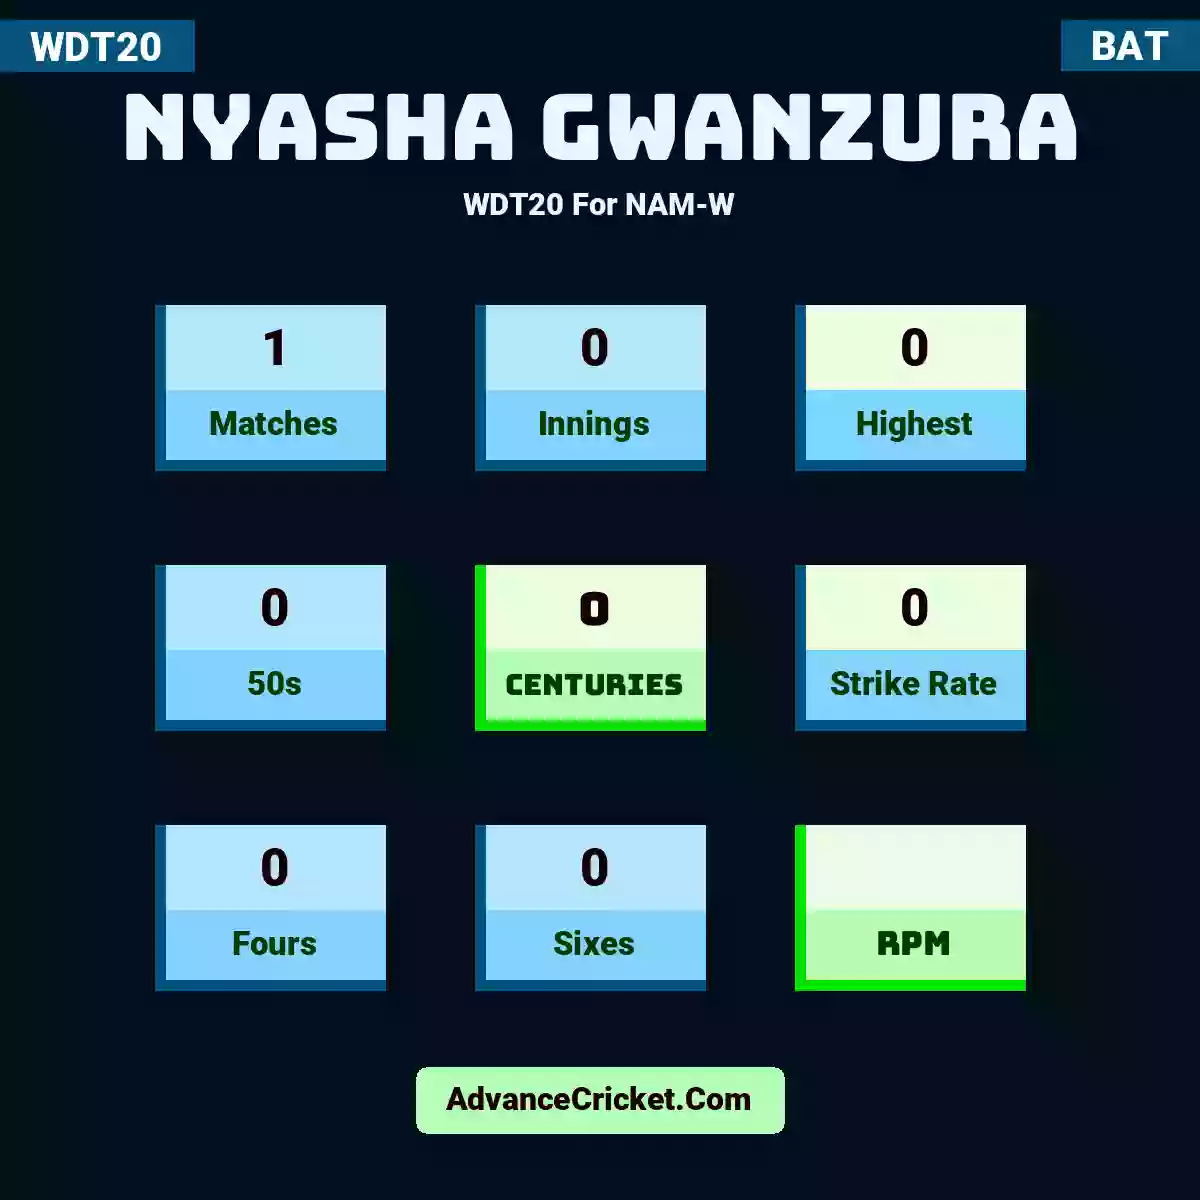 Nyasha Gwanzura WDT20  For NAM-W, Nyasha Gwanzura played 1 matches, scored 0 runs as highest, 0 half-centuries, and 0 centuries, with a strike rate of 0. N.Gwanzura hit 0 fours and 0 sixes.